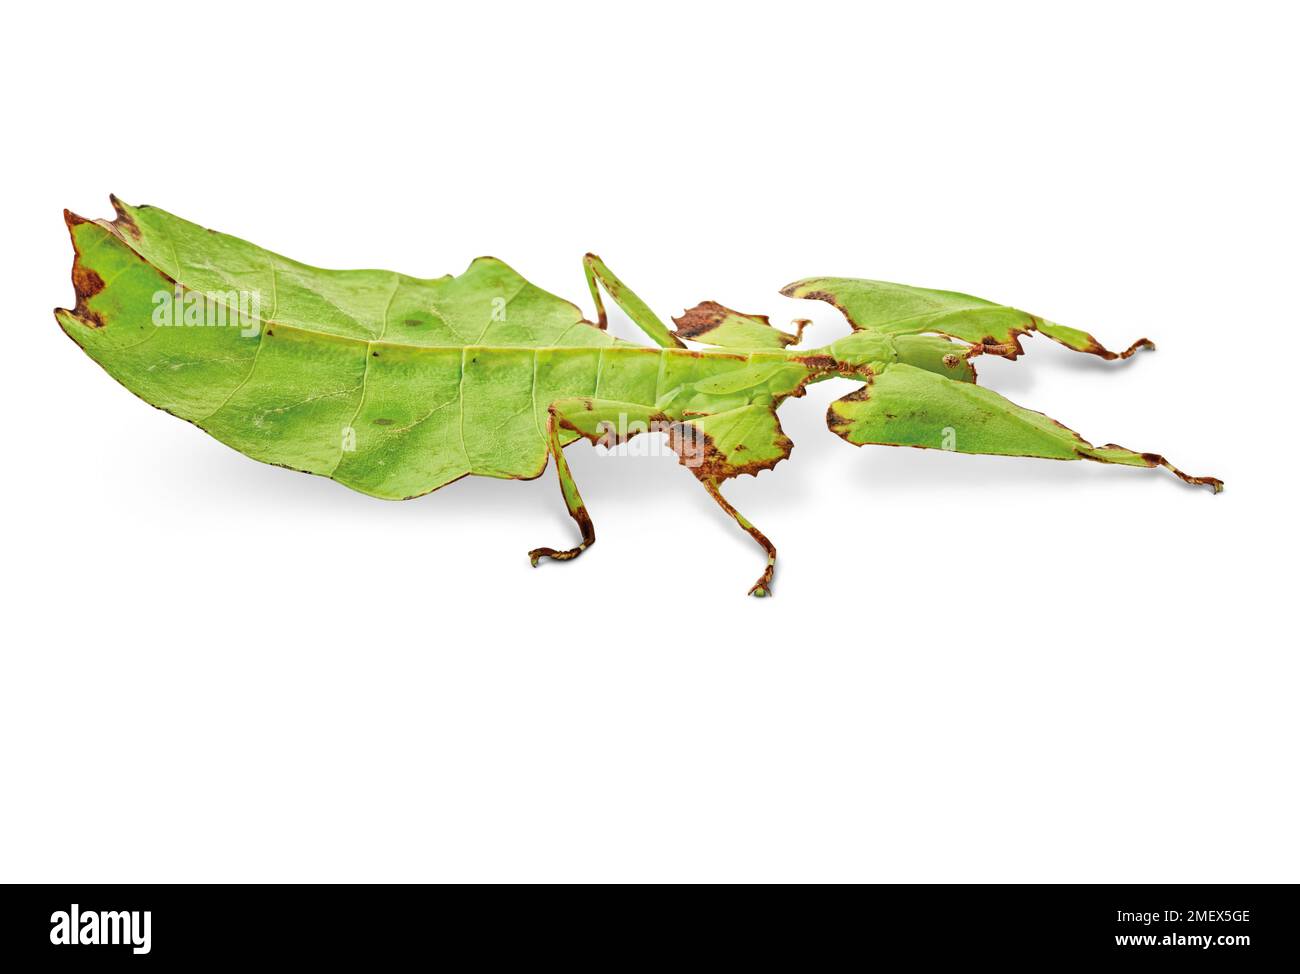 Giant leaf insect (Phyllium giganteum) Stock Photo